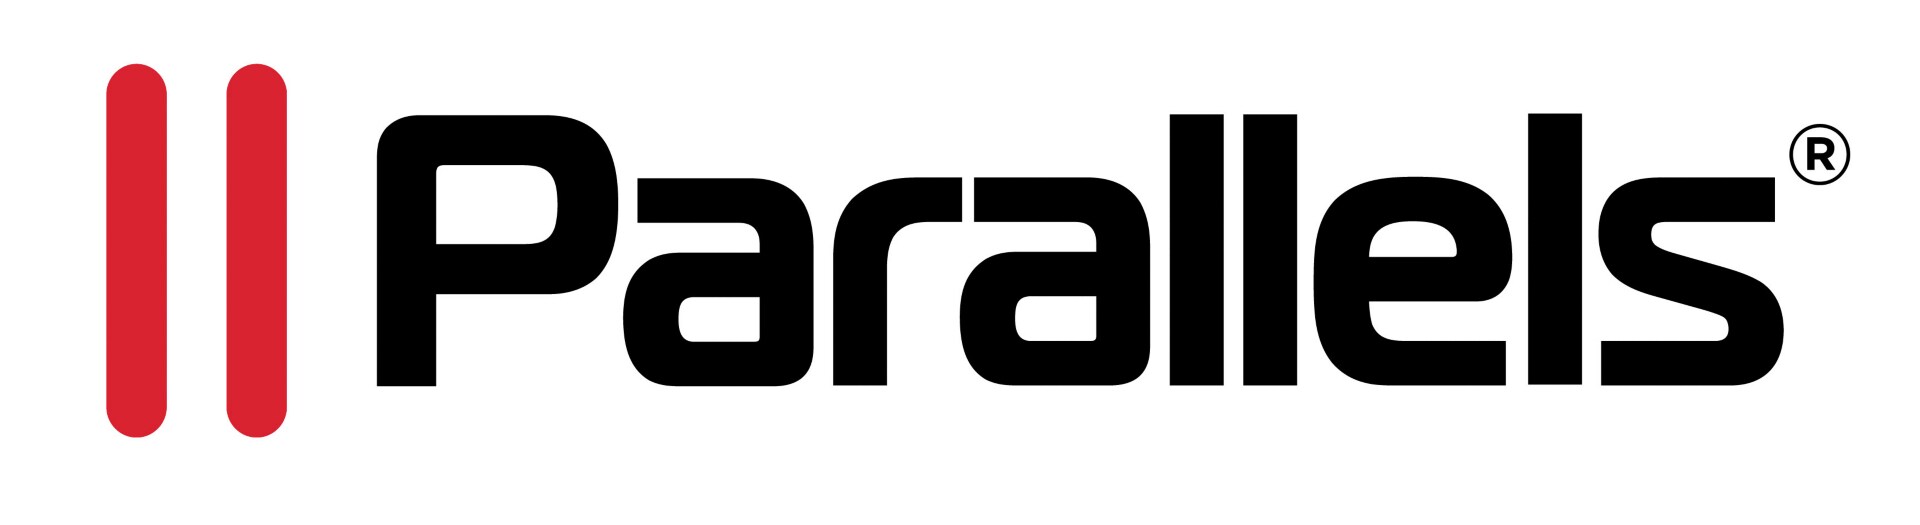 Parallels Desktop for Mac Enterprise Edition - subscription license (1 year) - 1 user